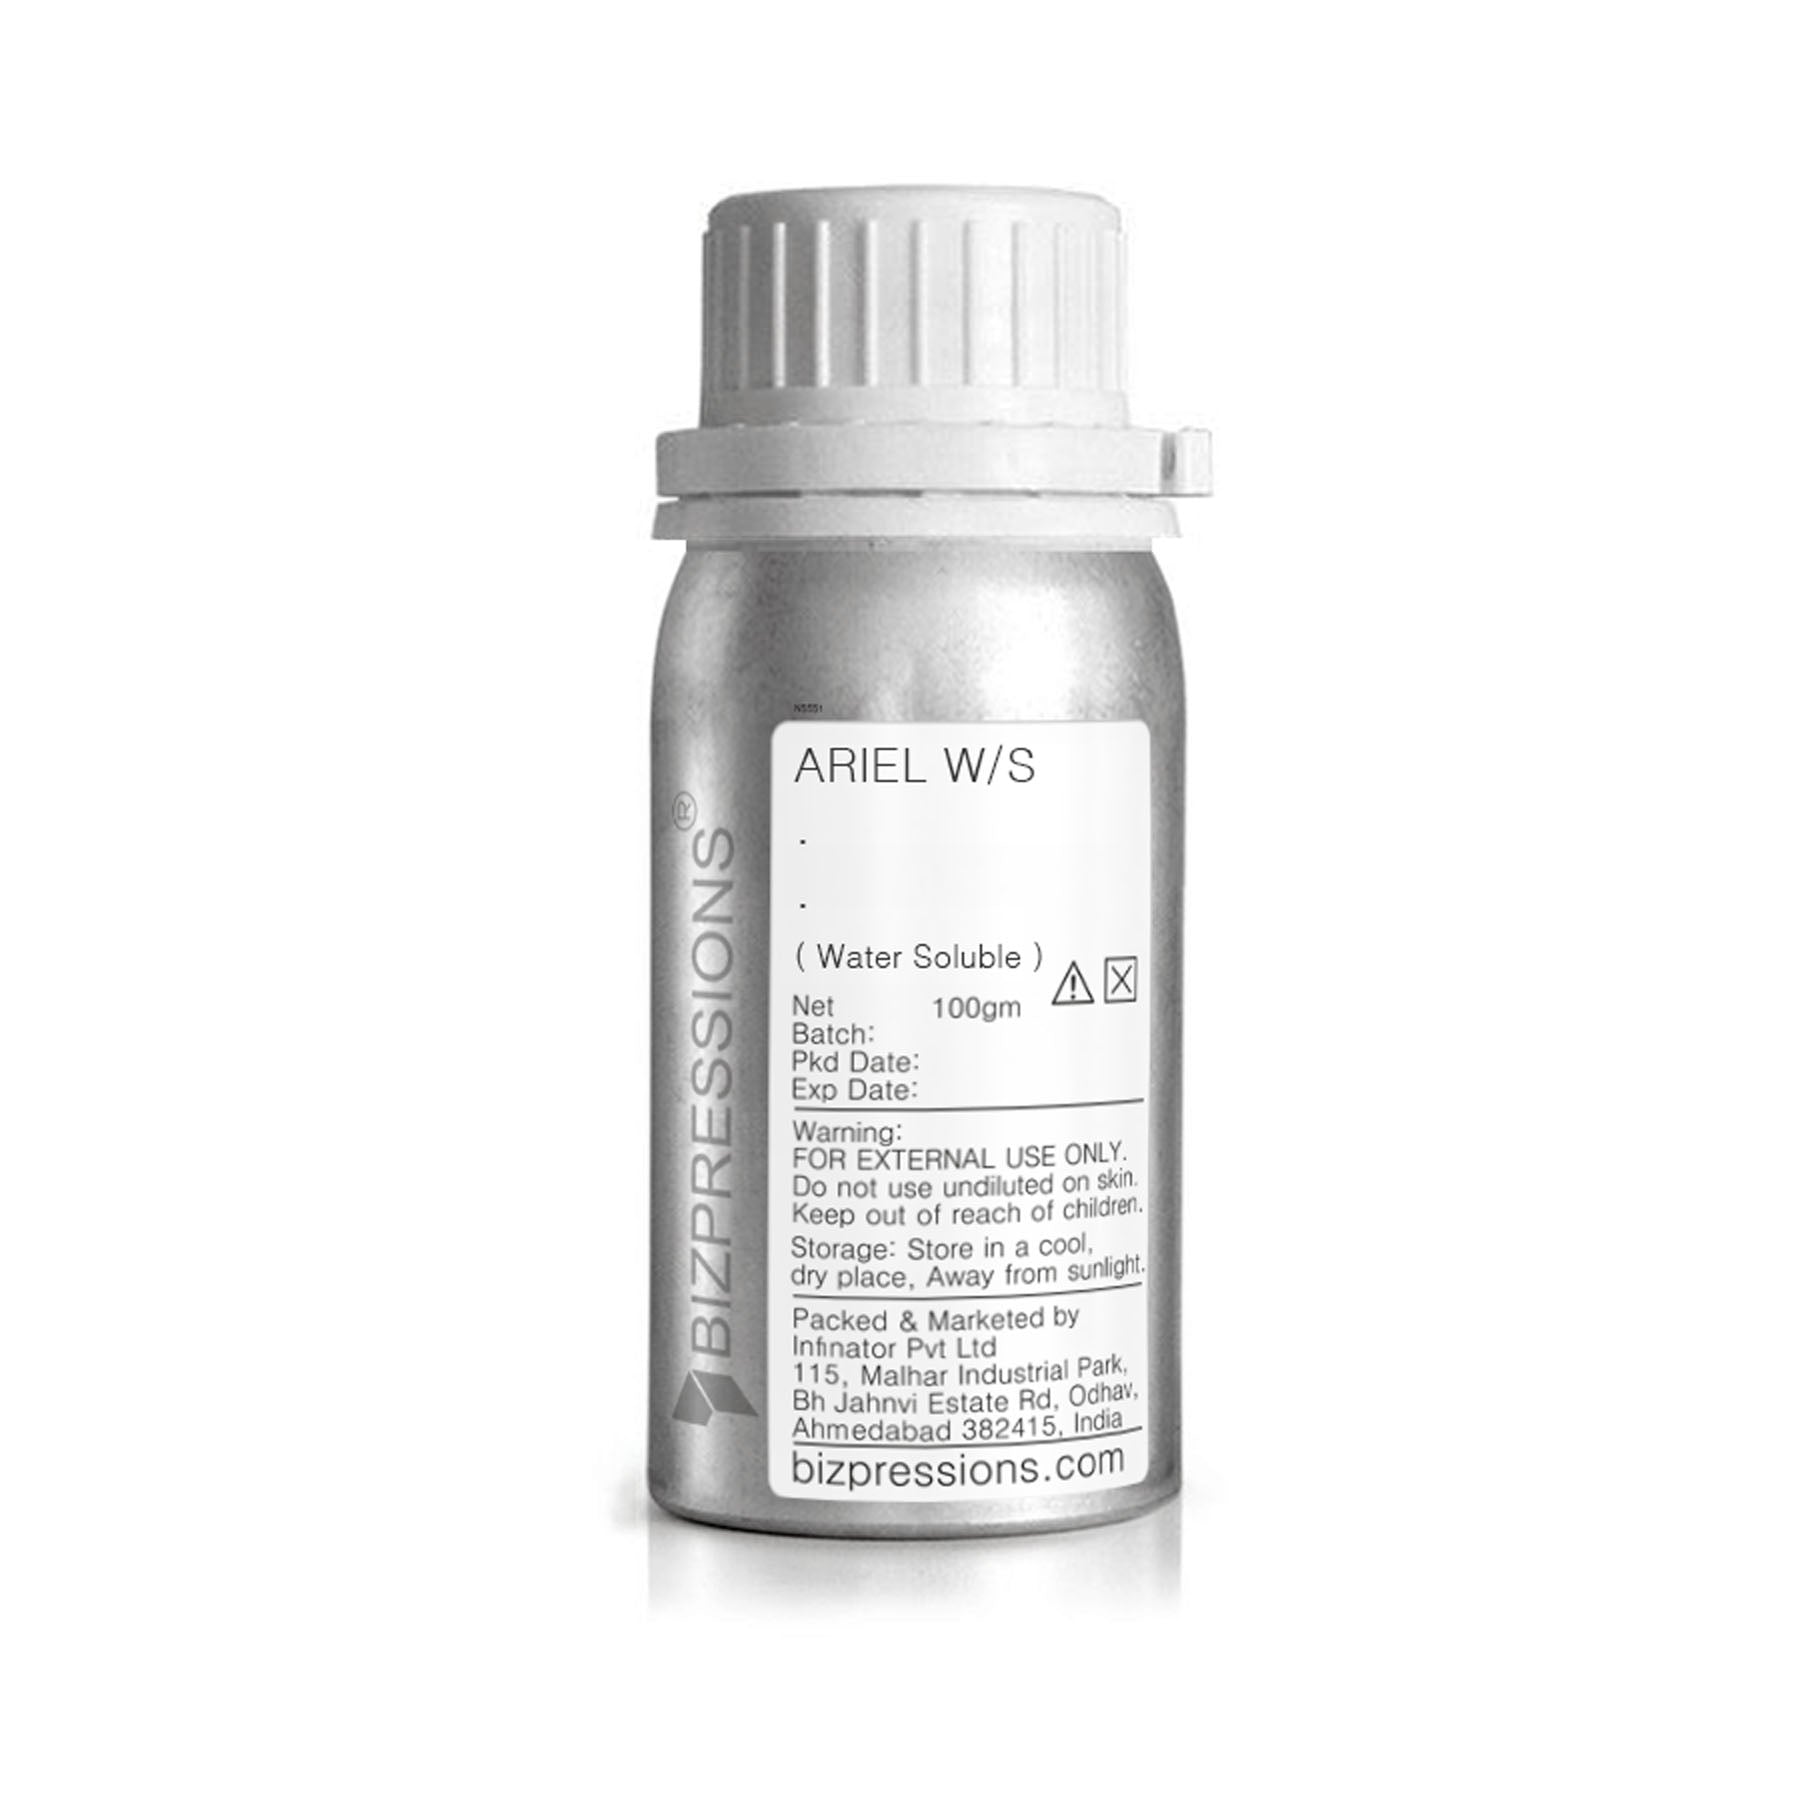 ARIEL W/S - Fragrance ( Water Soluble ) - 100 gm